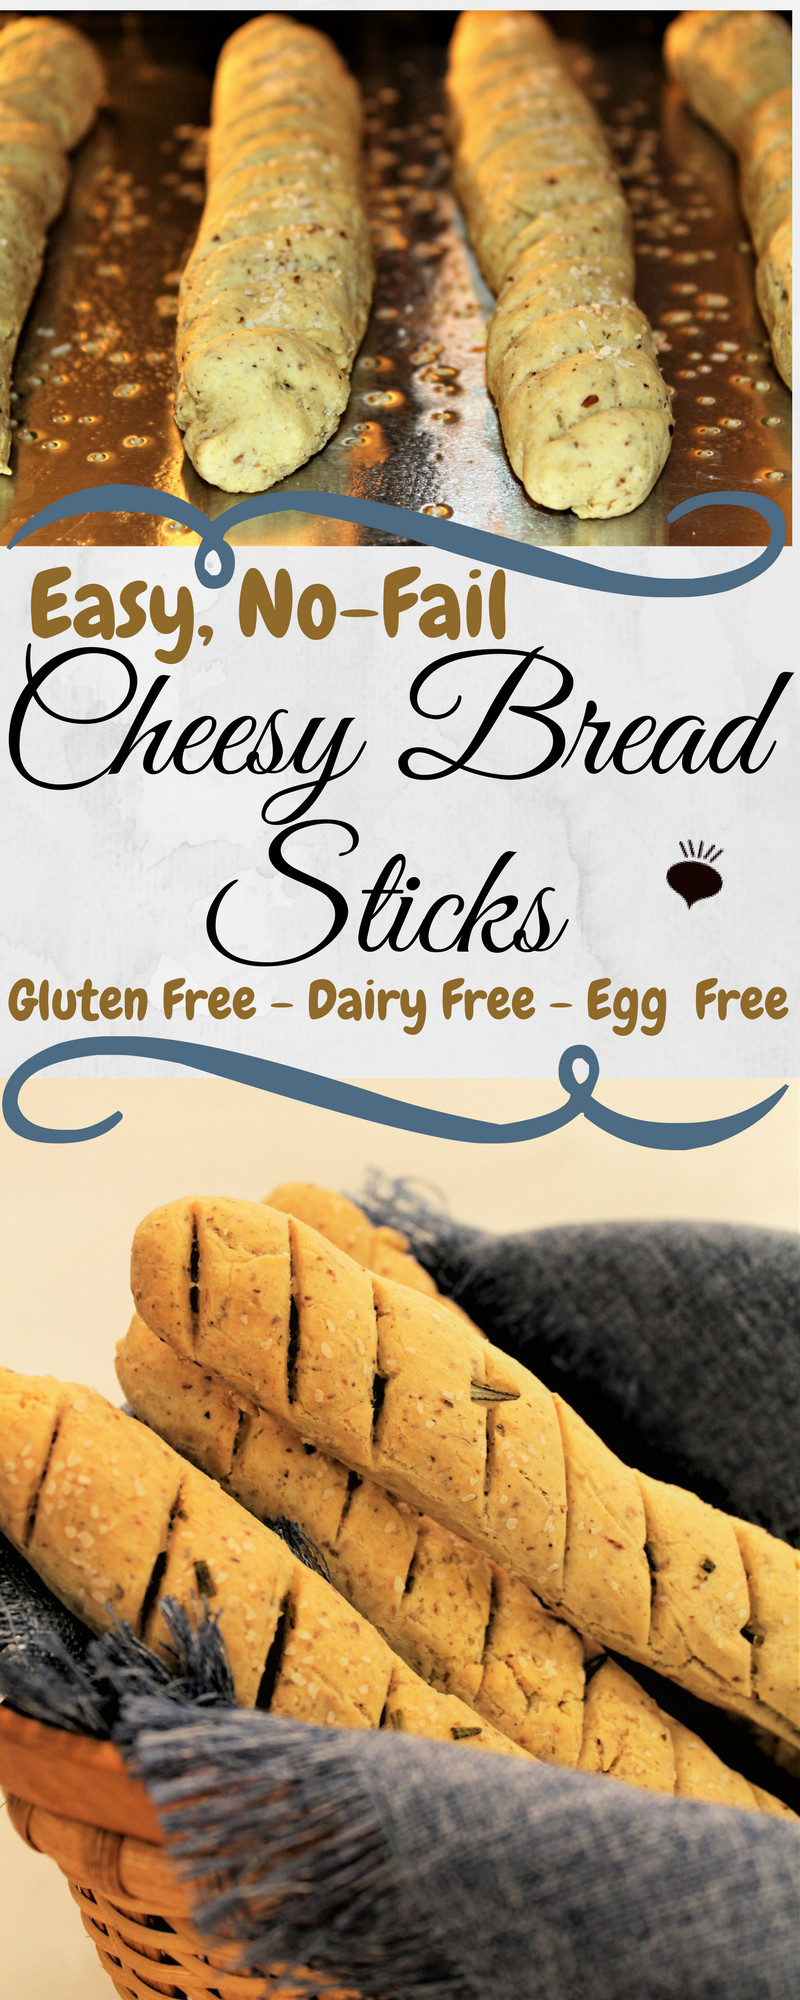 Gluten Free Bread Sticks Easy
 These Easy No Fail Gluten Free Cheesy Bread Sticks are the